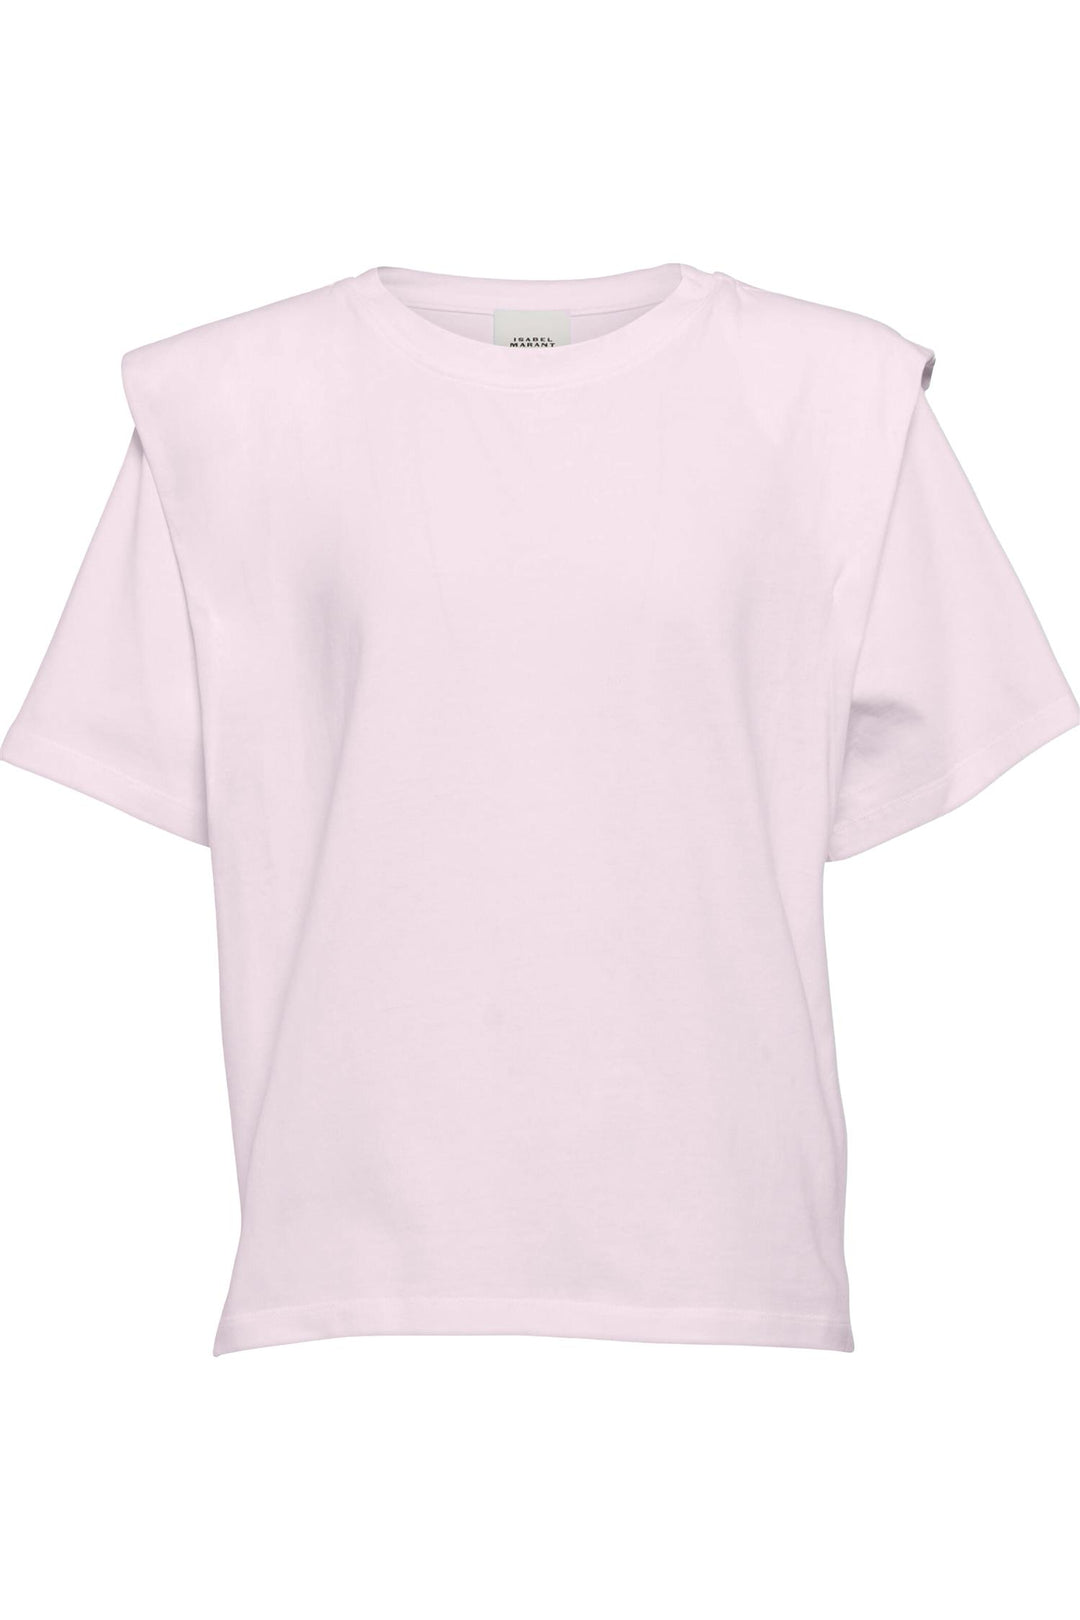 Zelitos T-Shirt Light Pink